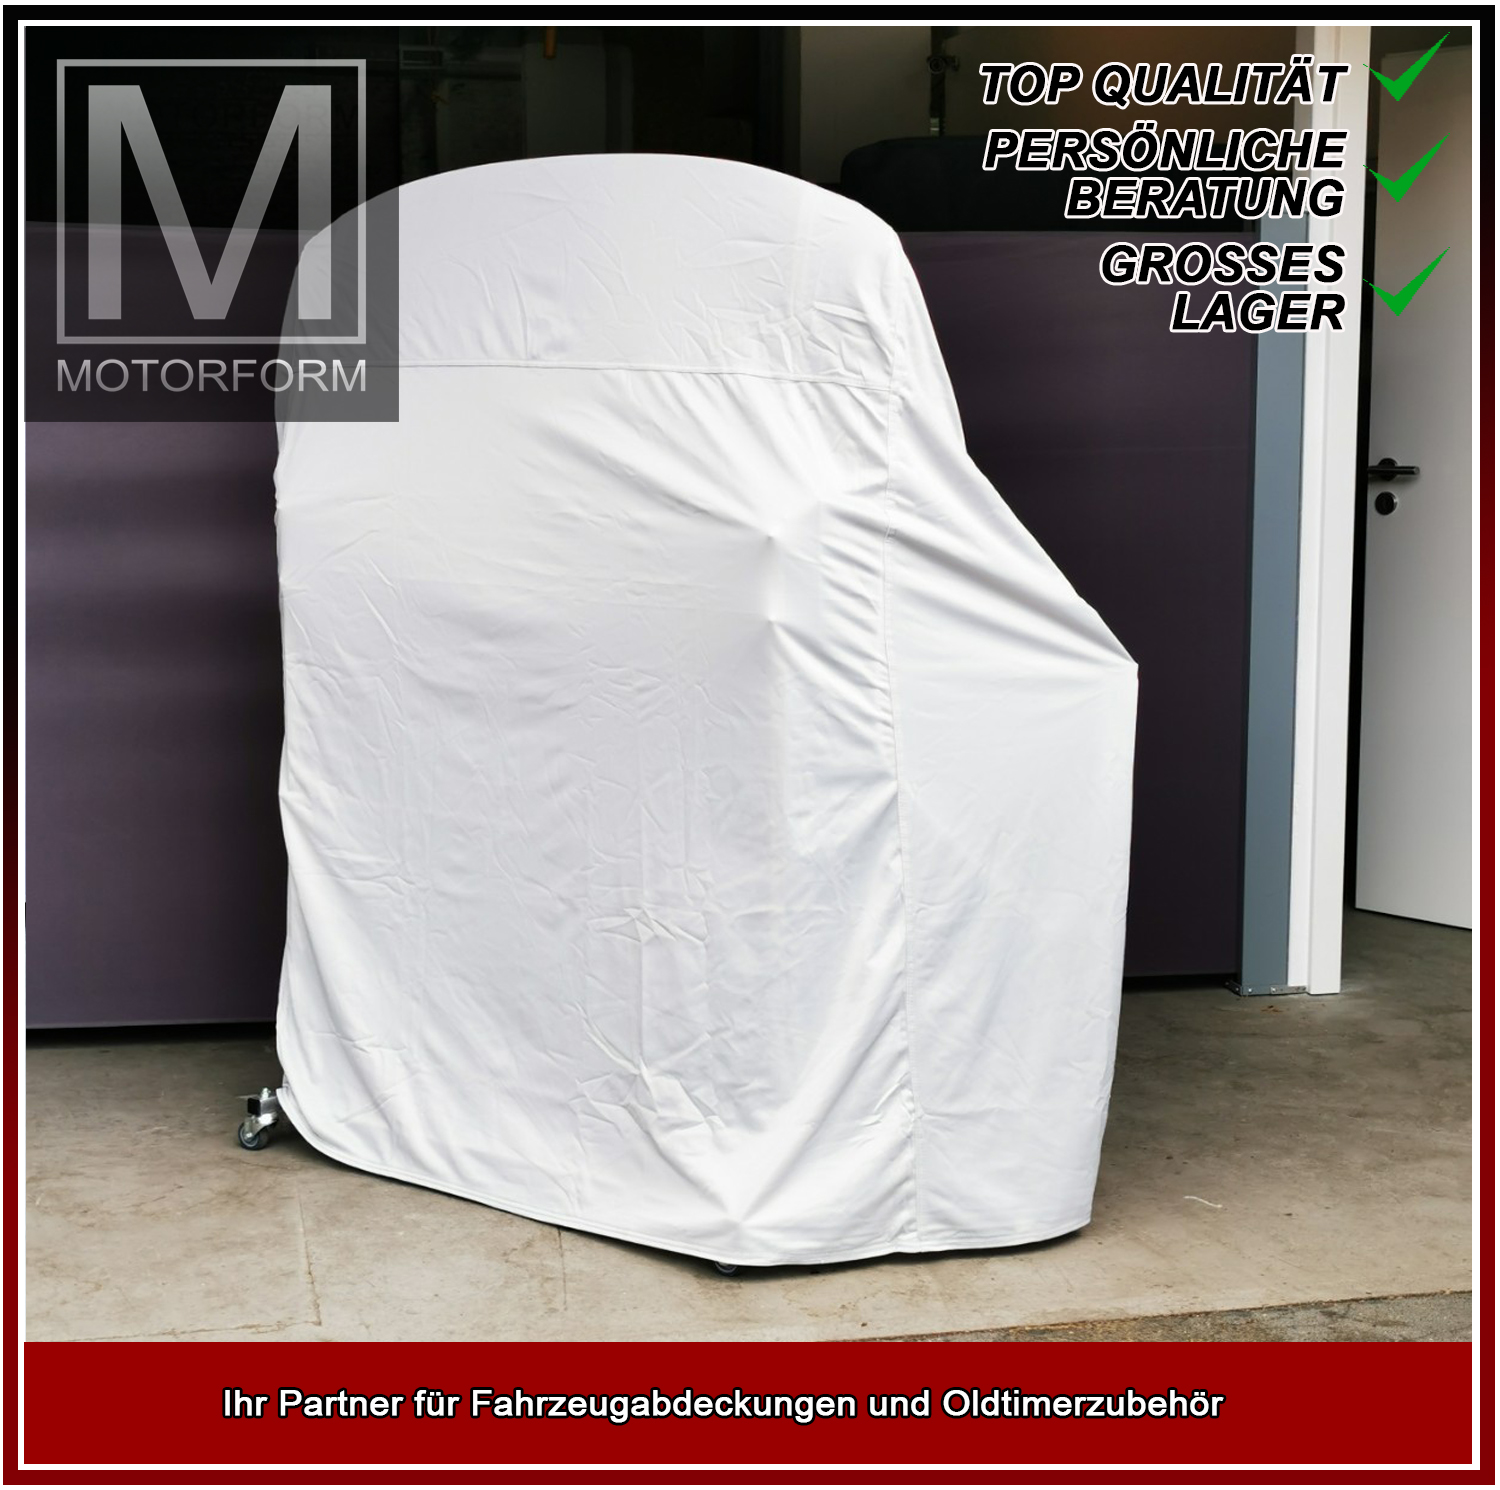 Silver Series Hardtop-Cover for Hardtop-Cover Alfa Romeo Spider 